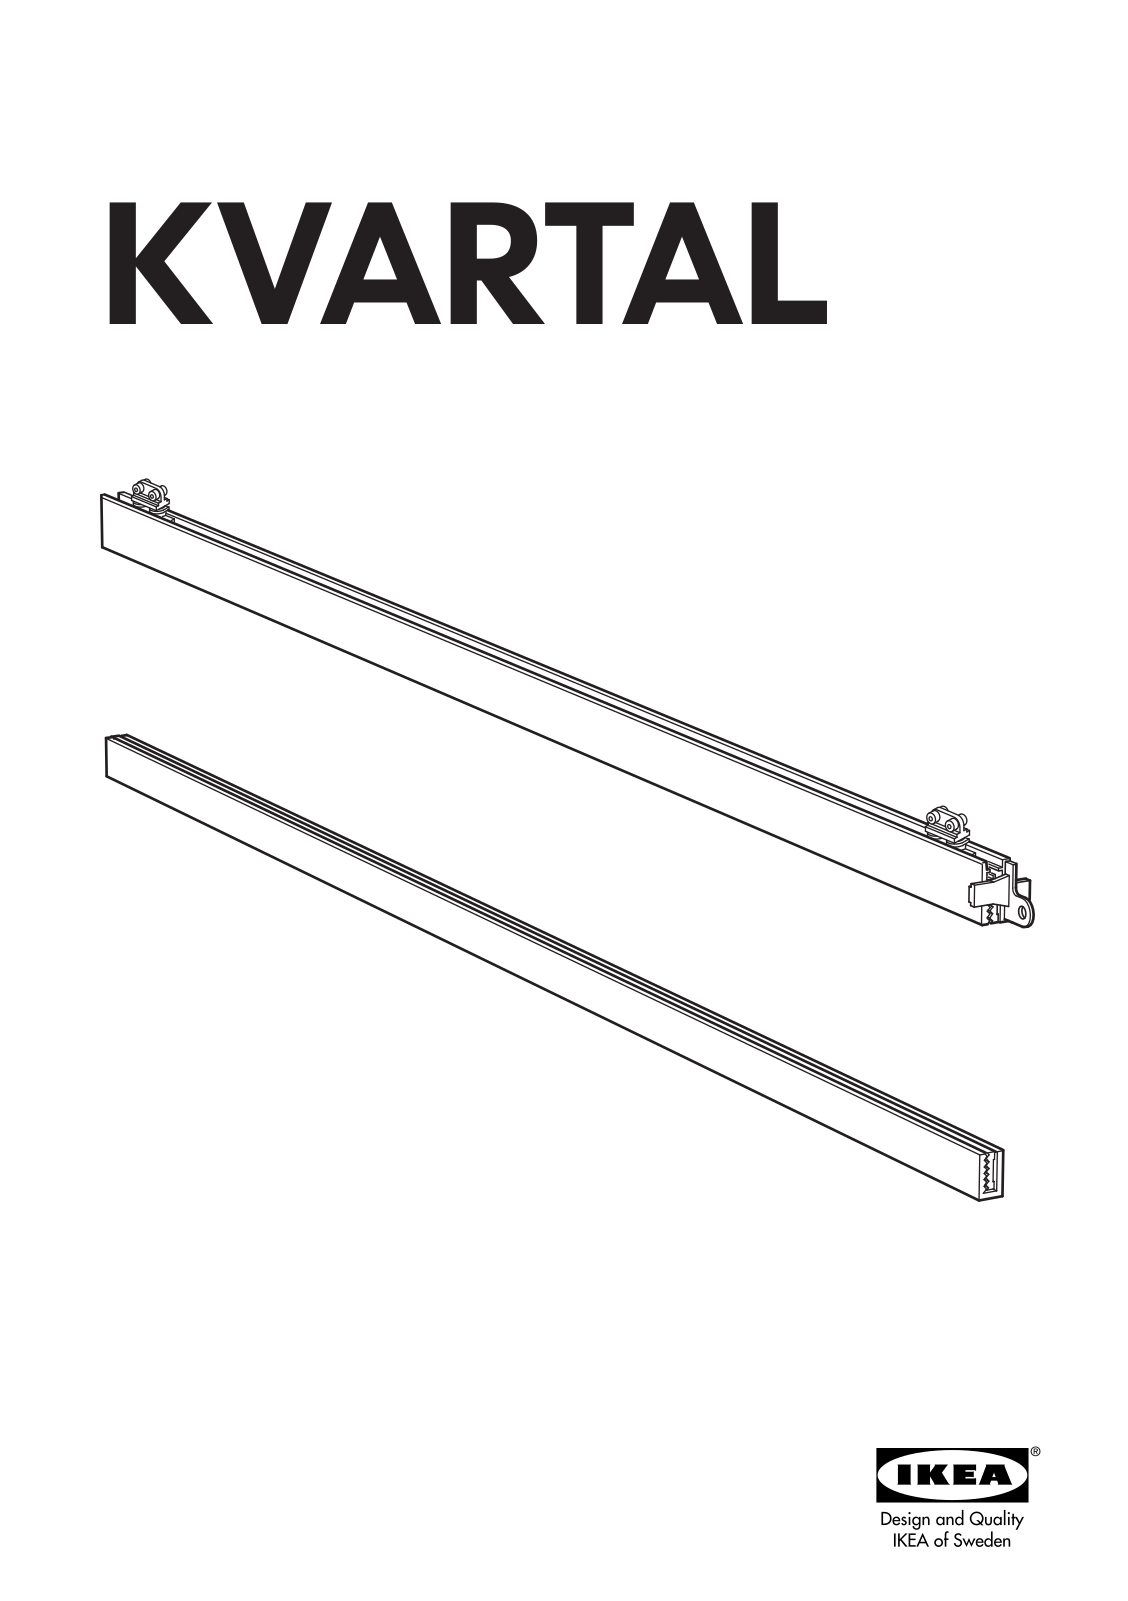 IKEA KVARTAL TOP-BOTTOM RAIL 23 5-8 Assembly Instruction